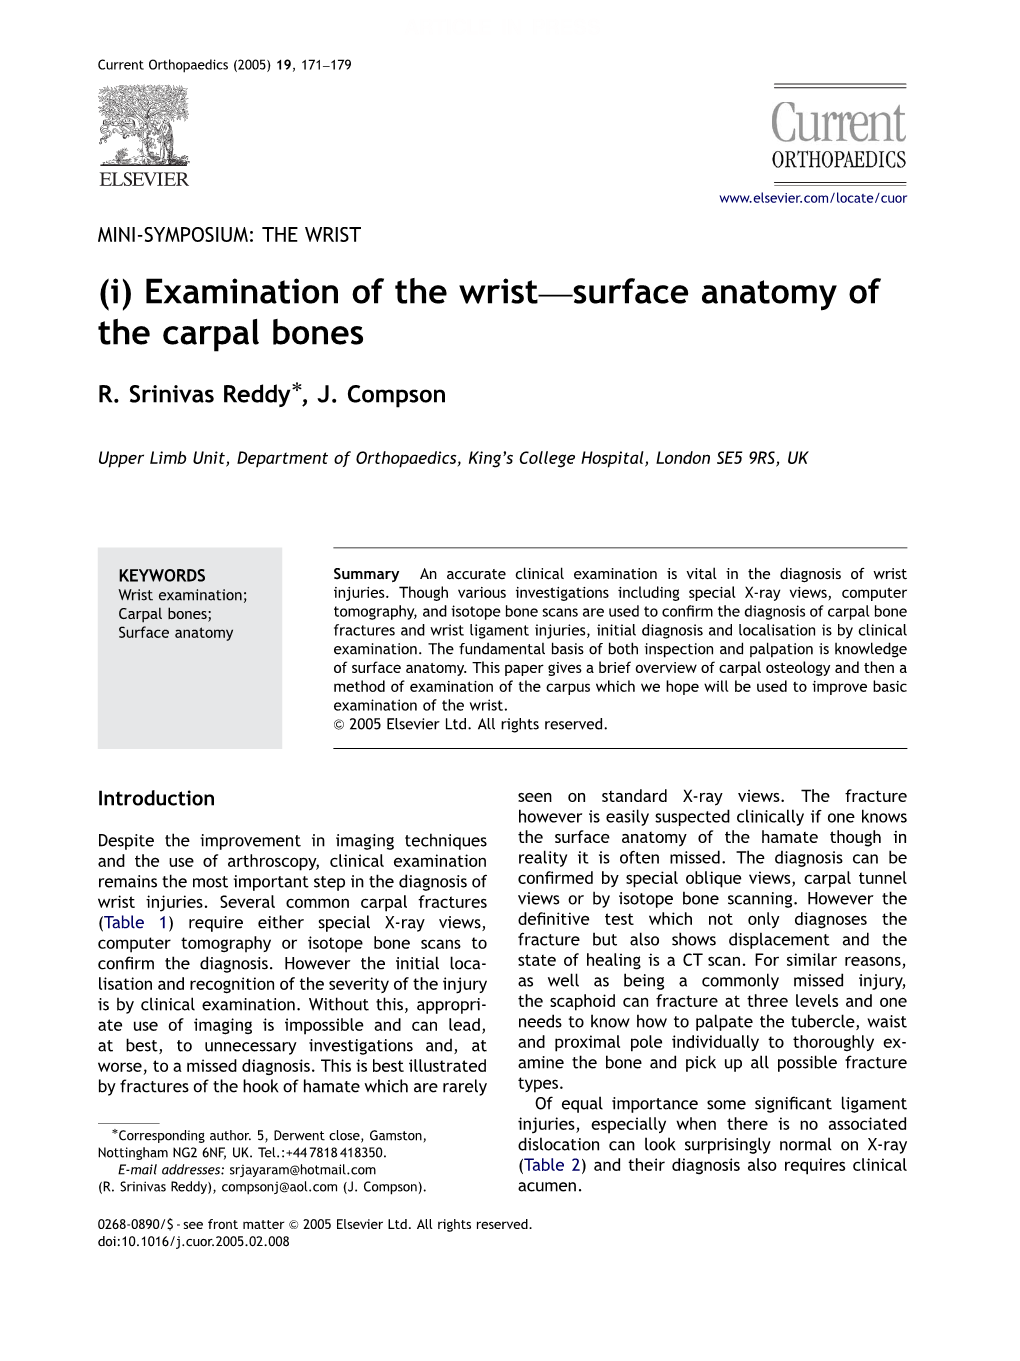 (I) Examination of the Wrist—Surface Anatomy of the Carpal Bones